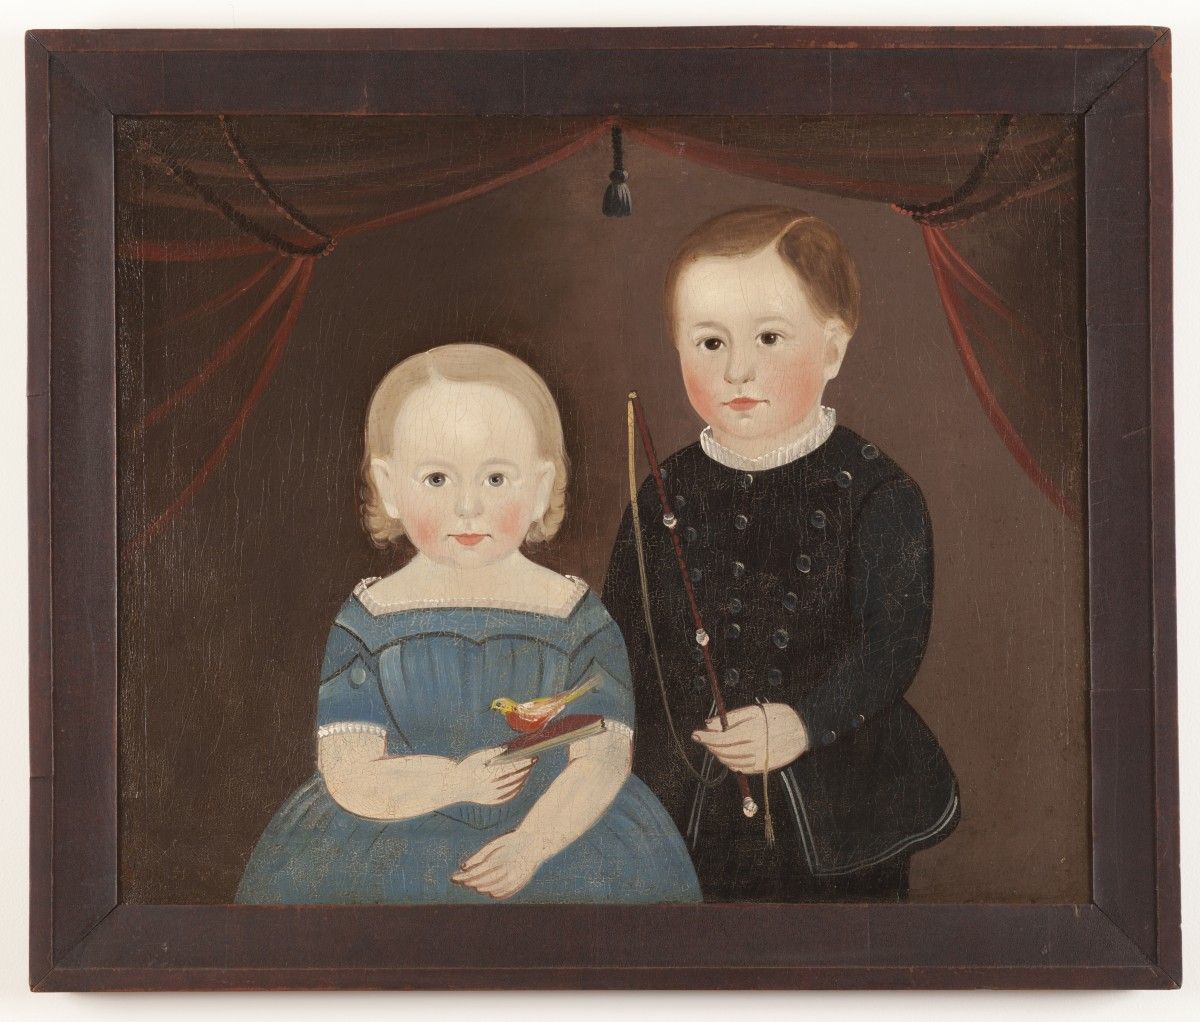 Sturtevant Hamblin (1817-1884), Portrait of Two Children, c. 1845, Oil on Canvas, 21 1/2 x 26 1/2 inches, Courtesy of the Barbara L. Gordon Collection